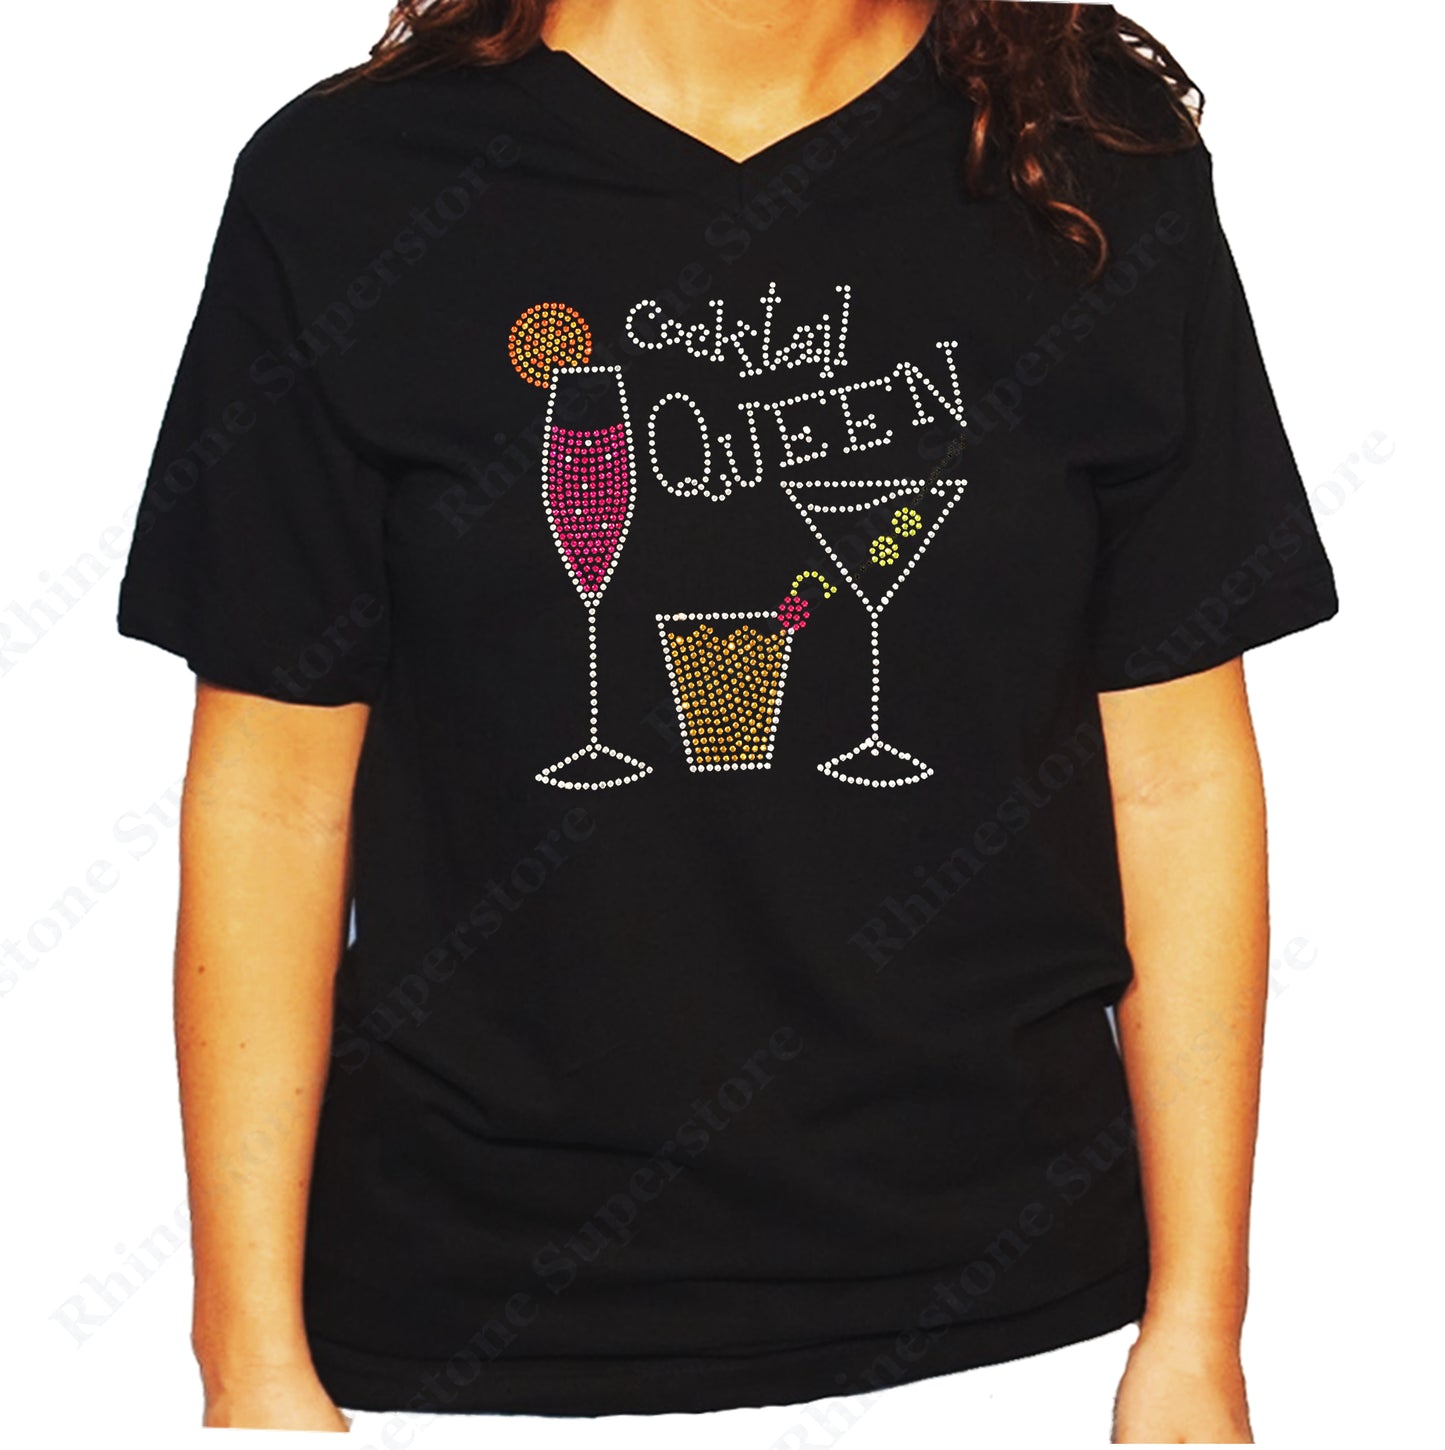 Women's / Unisex T-Shirt with Cocktail Queen in Rhinestones